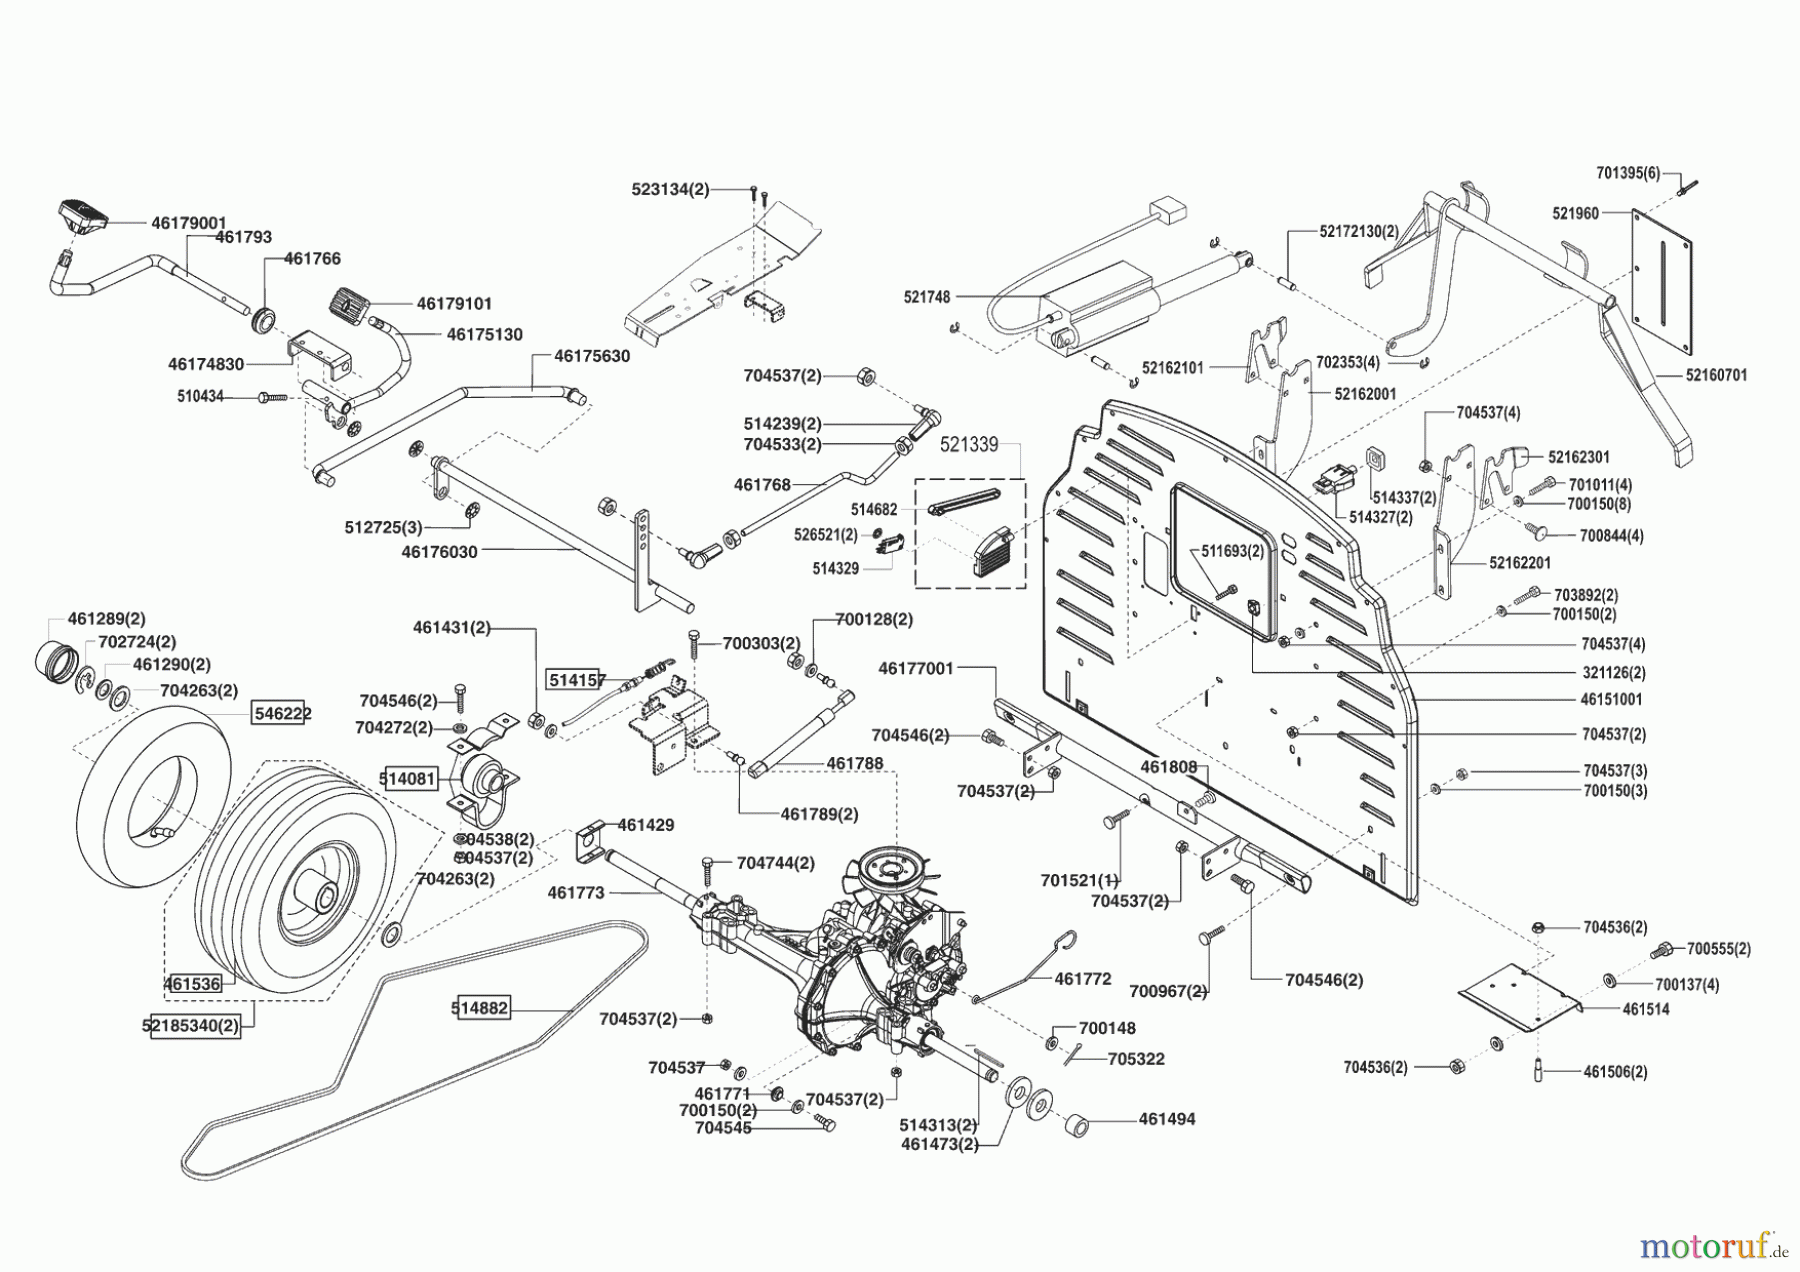  AL-KO Gartentechnik Rasentraktor T18-102 HDE EDEN PARC Seite 3